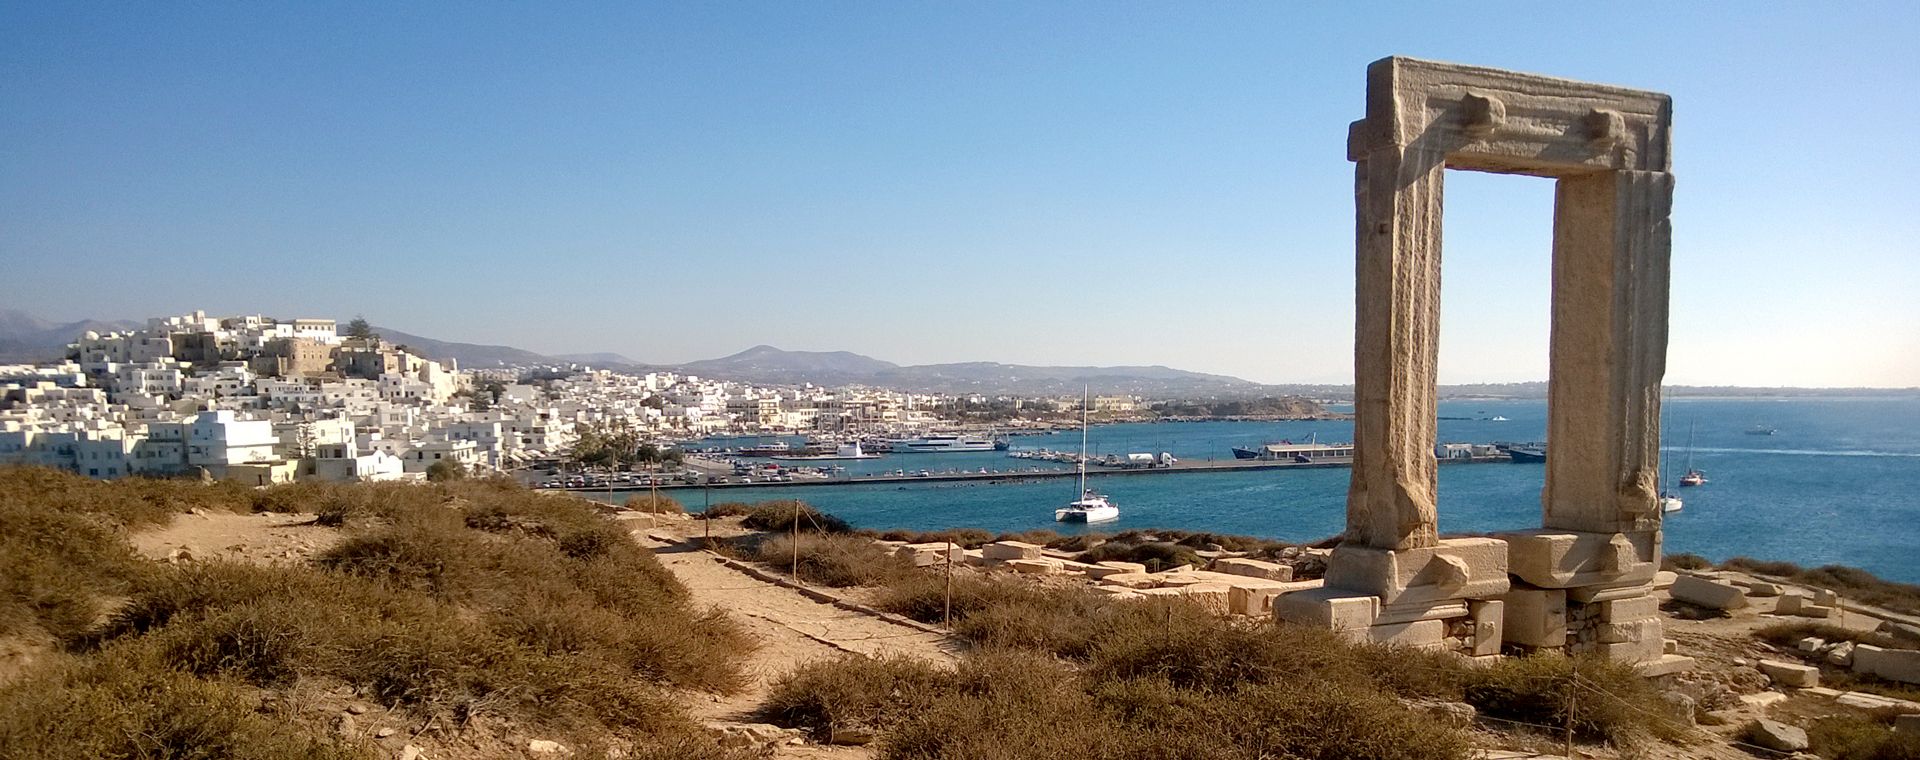 Naxos, Paros : voyage en famille 